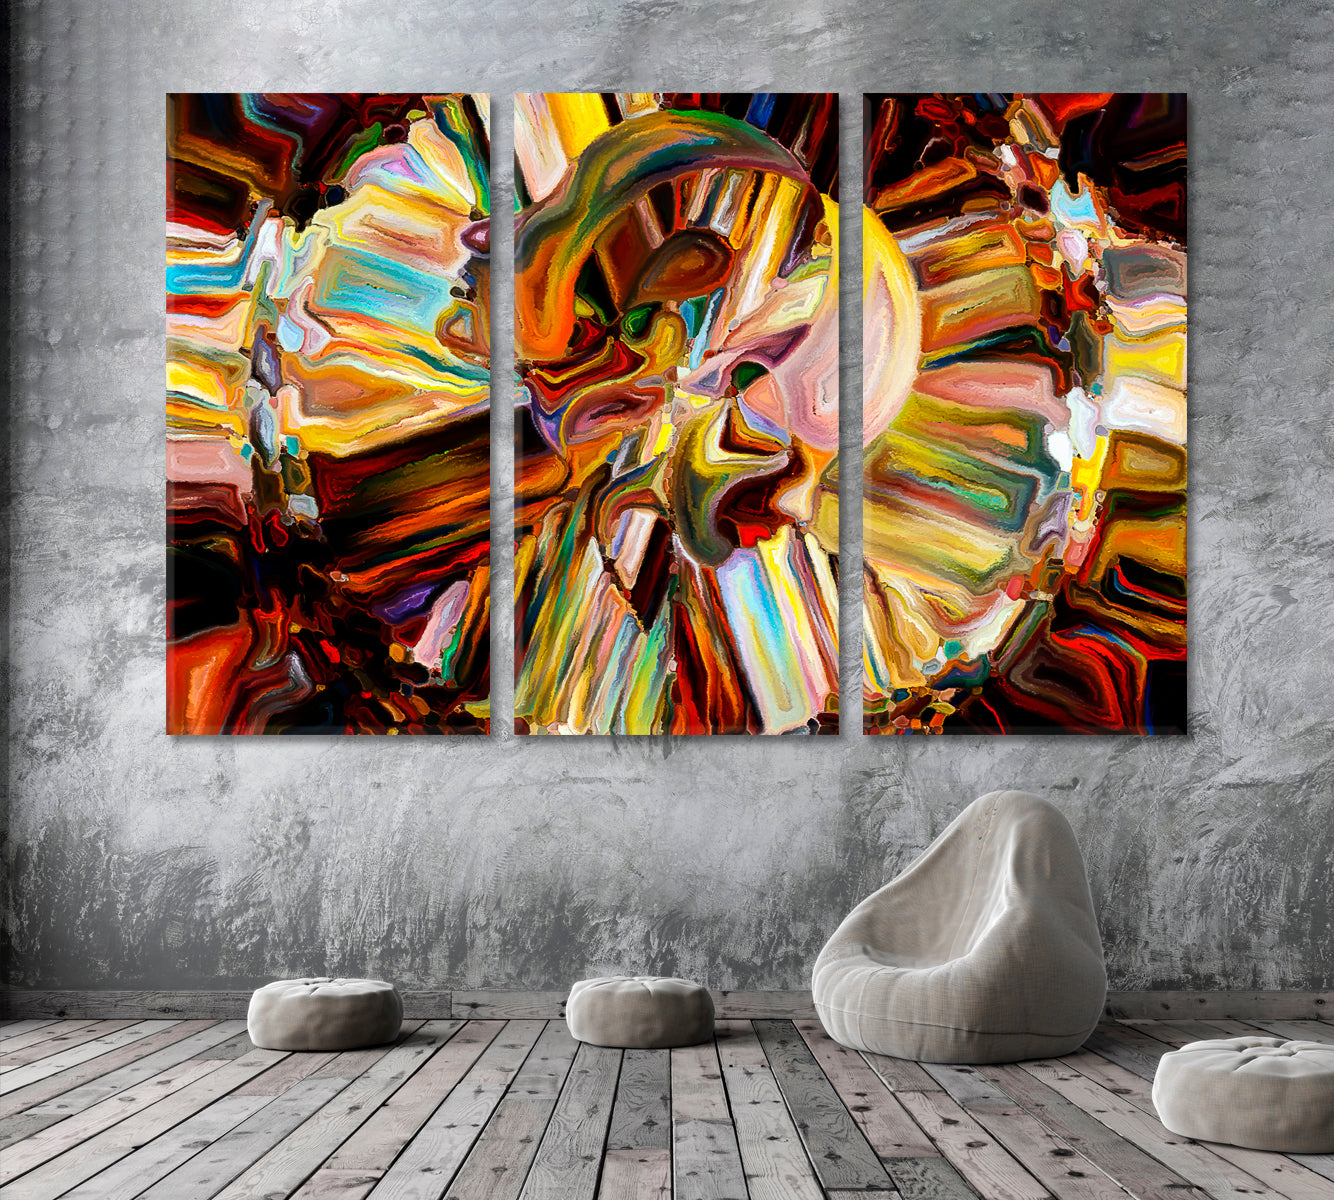 Frame Of Mind Contemporary Art Artesty 3 panels 36" x 24" 